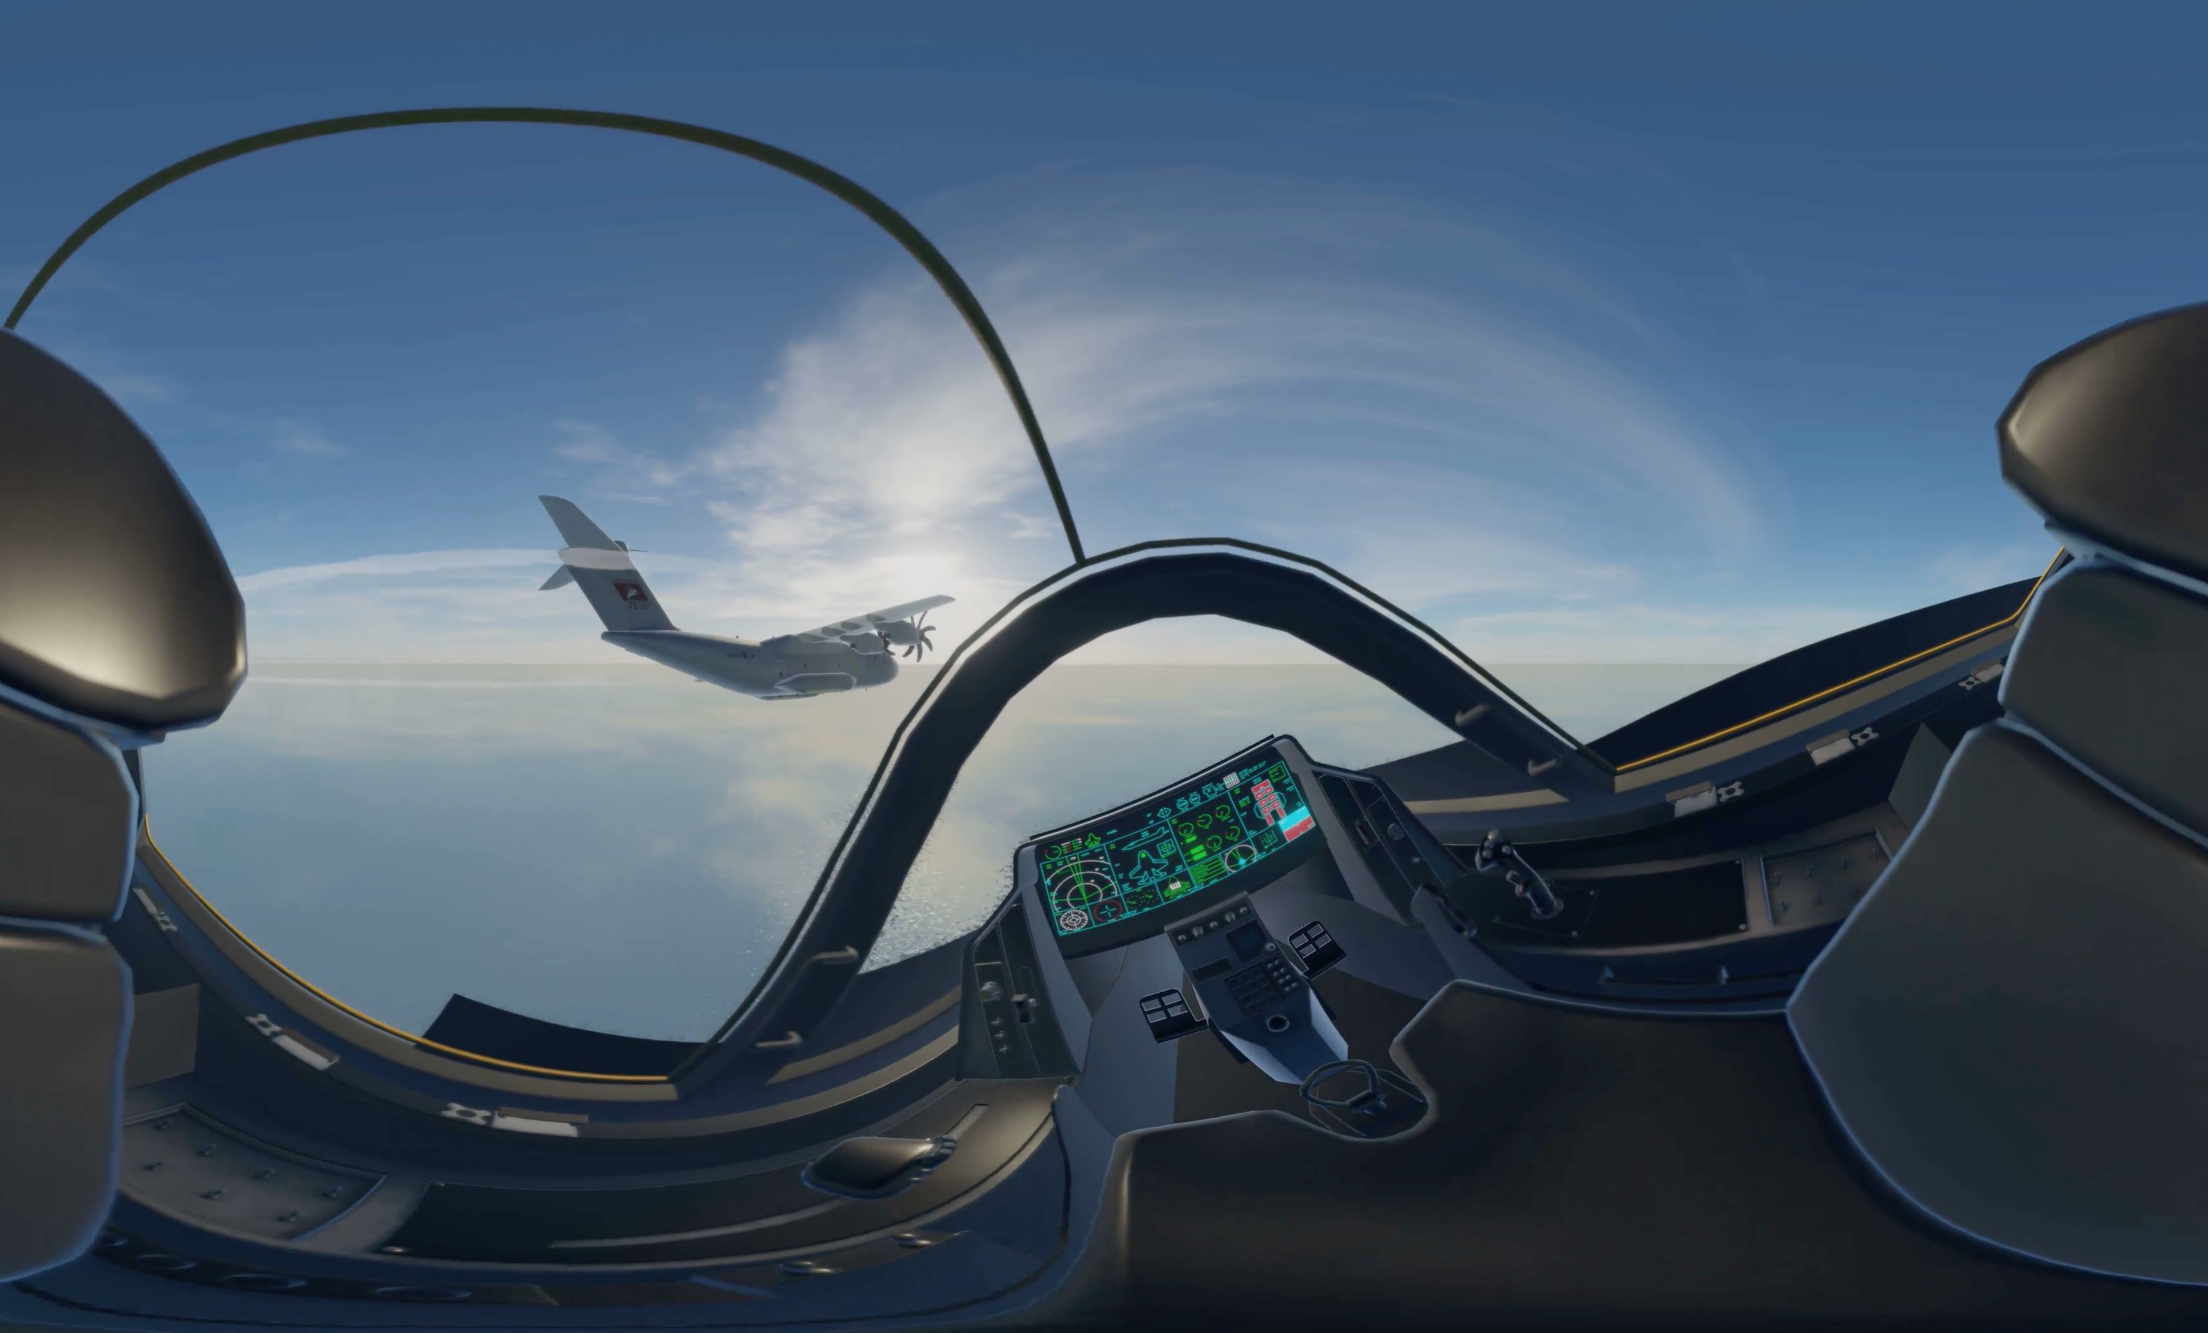 RAF VR EXPERIENCE